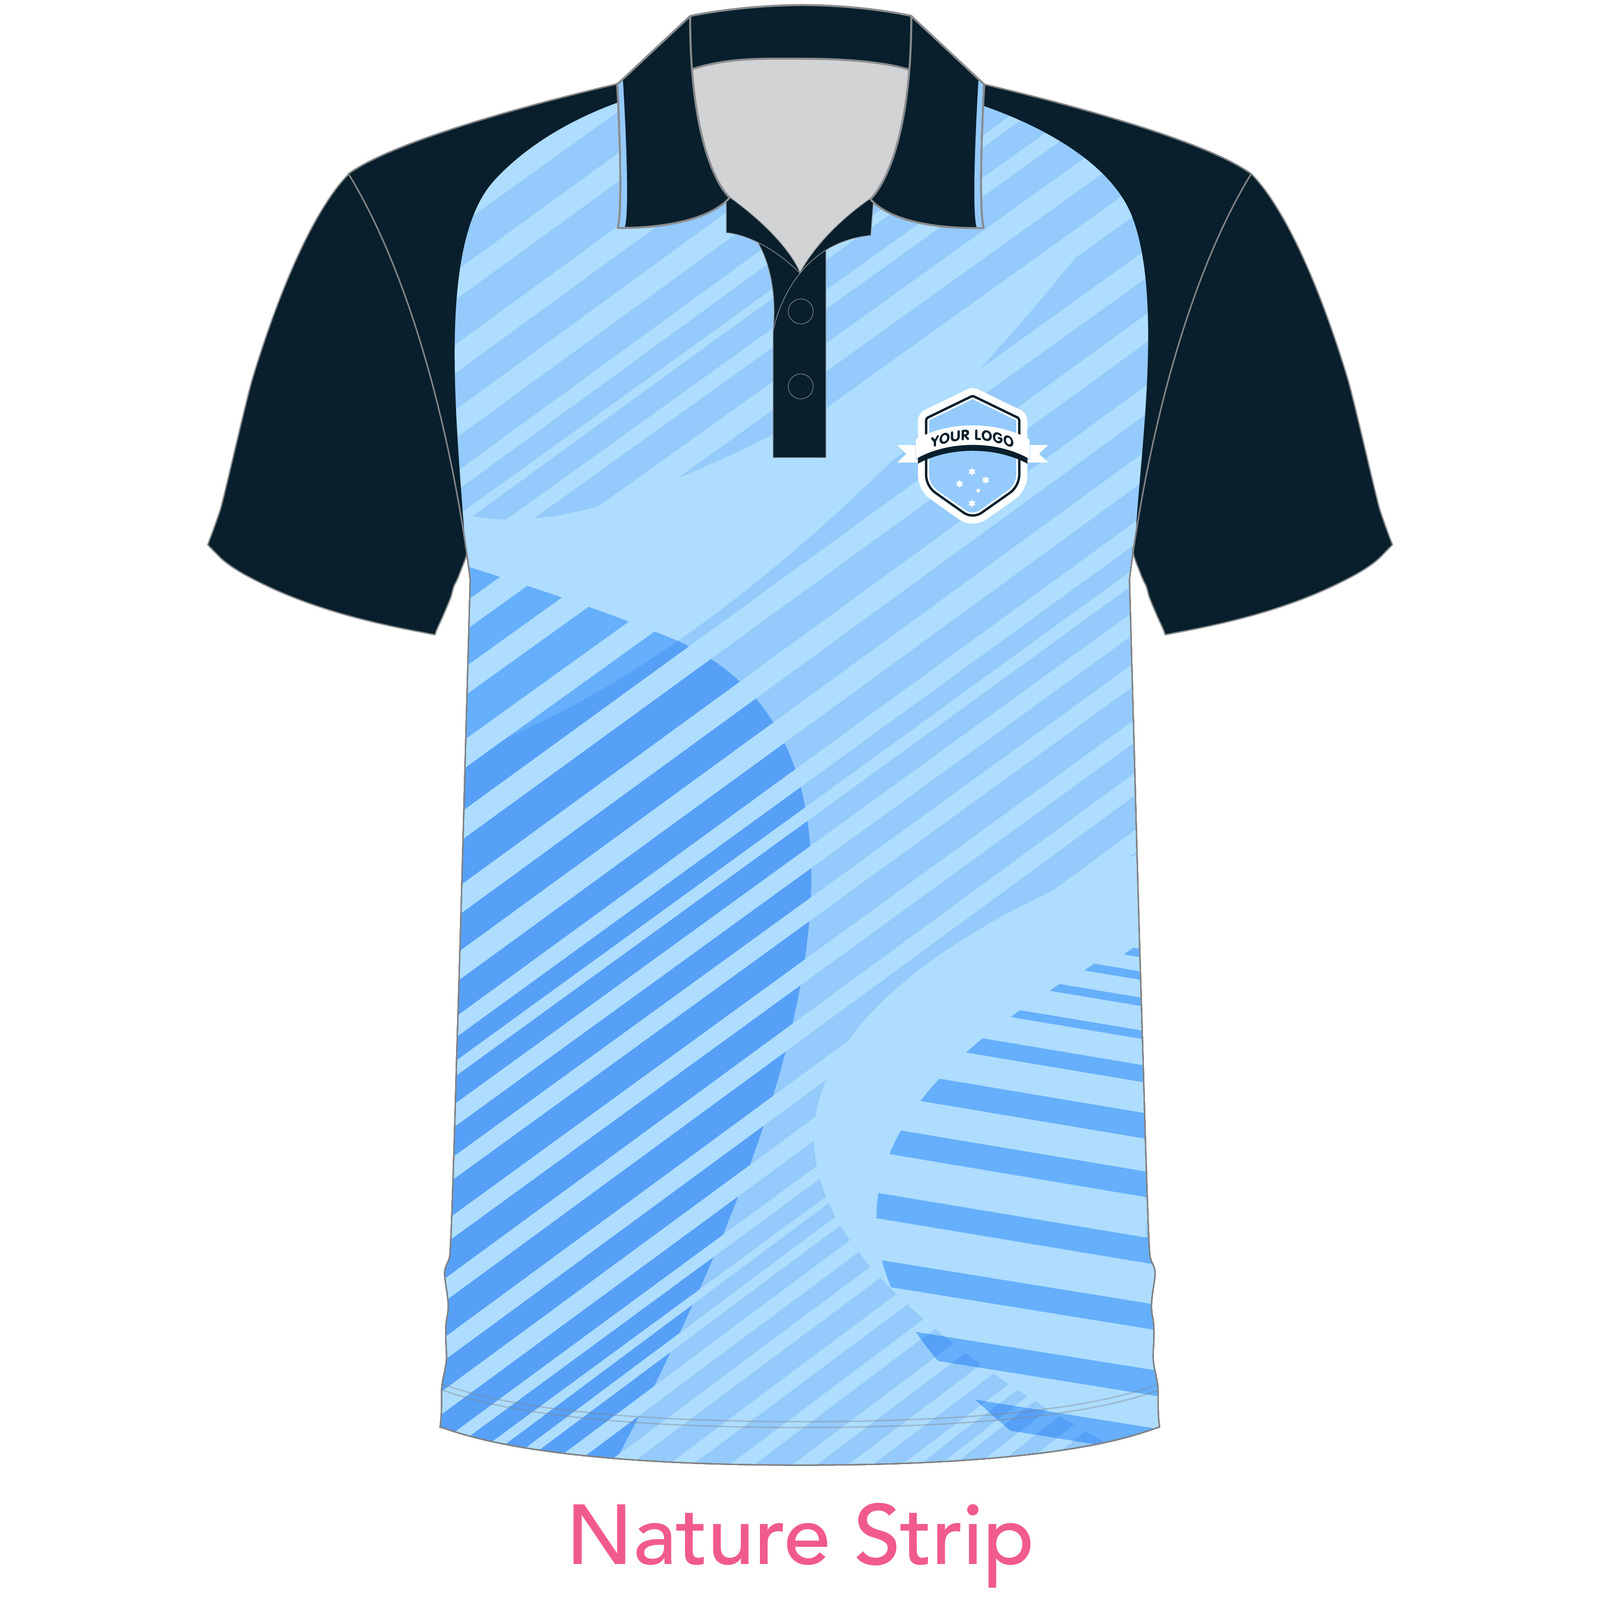 Customised Shirt - Nature Strip